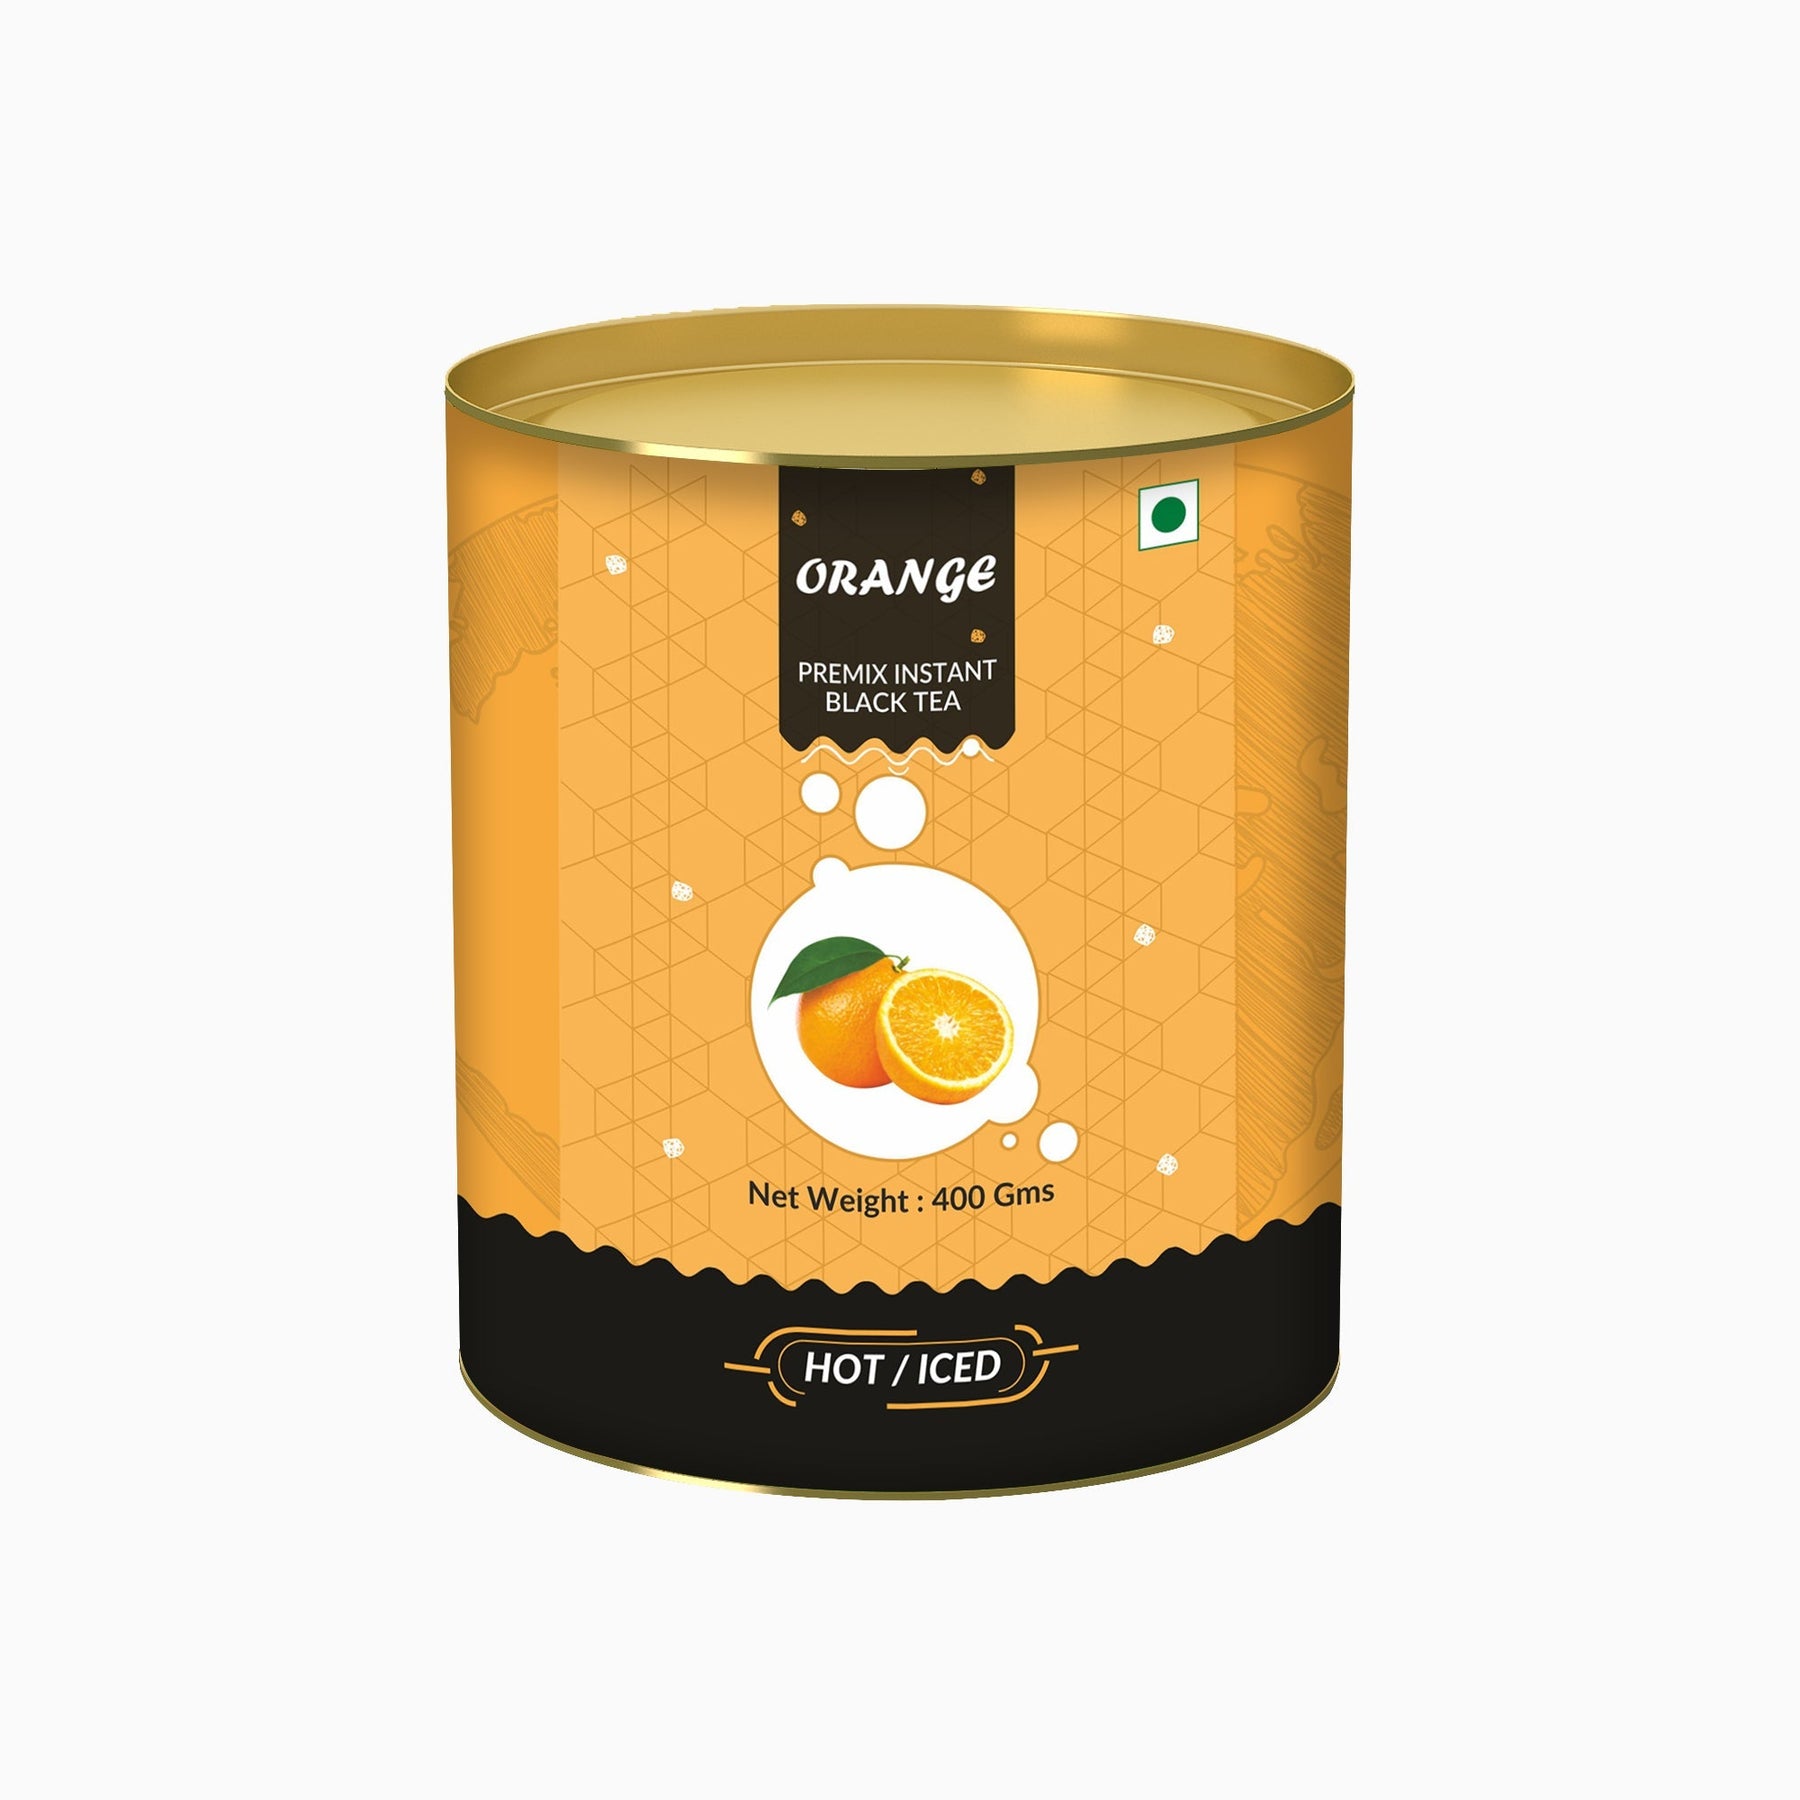 Orange Flavored Instant Black Tea - 800 gms